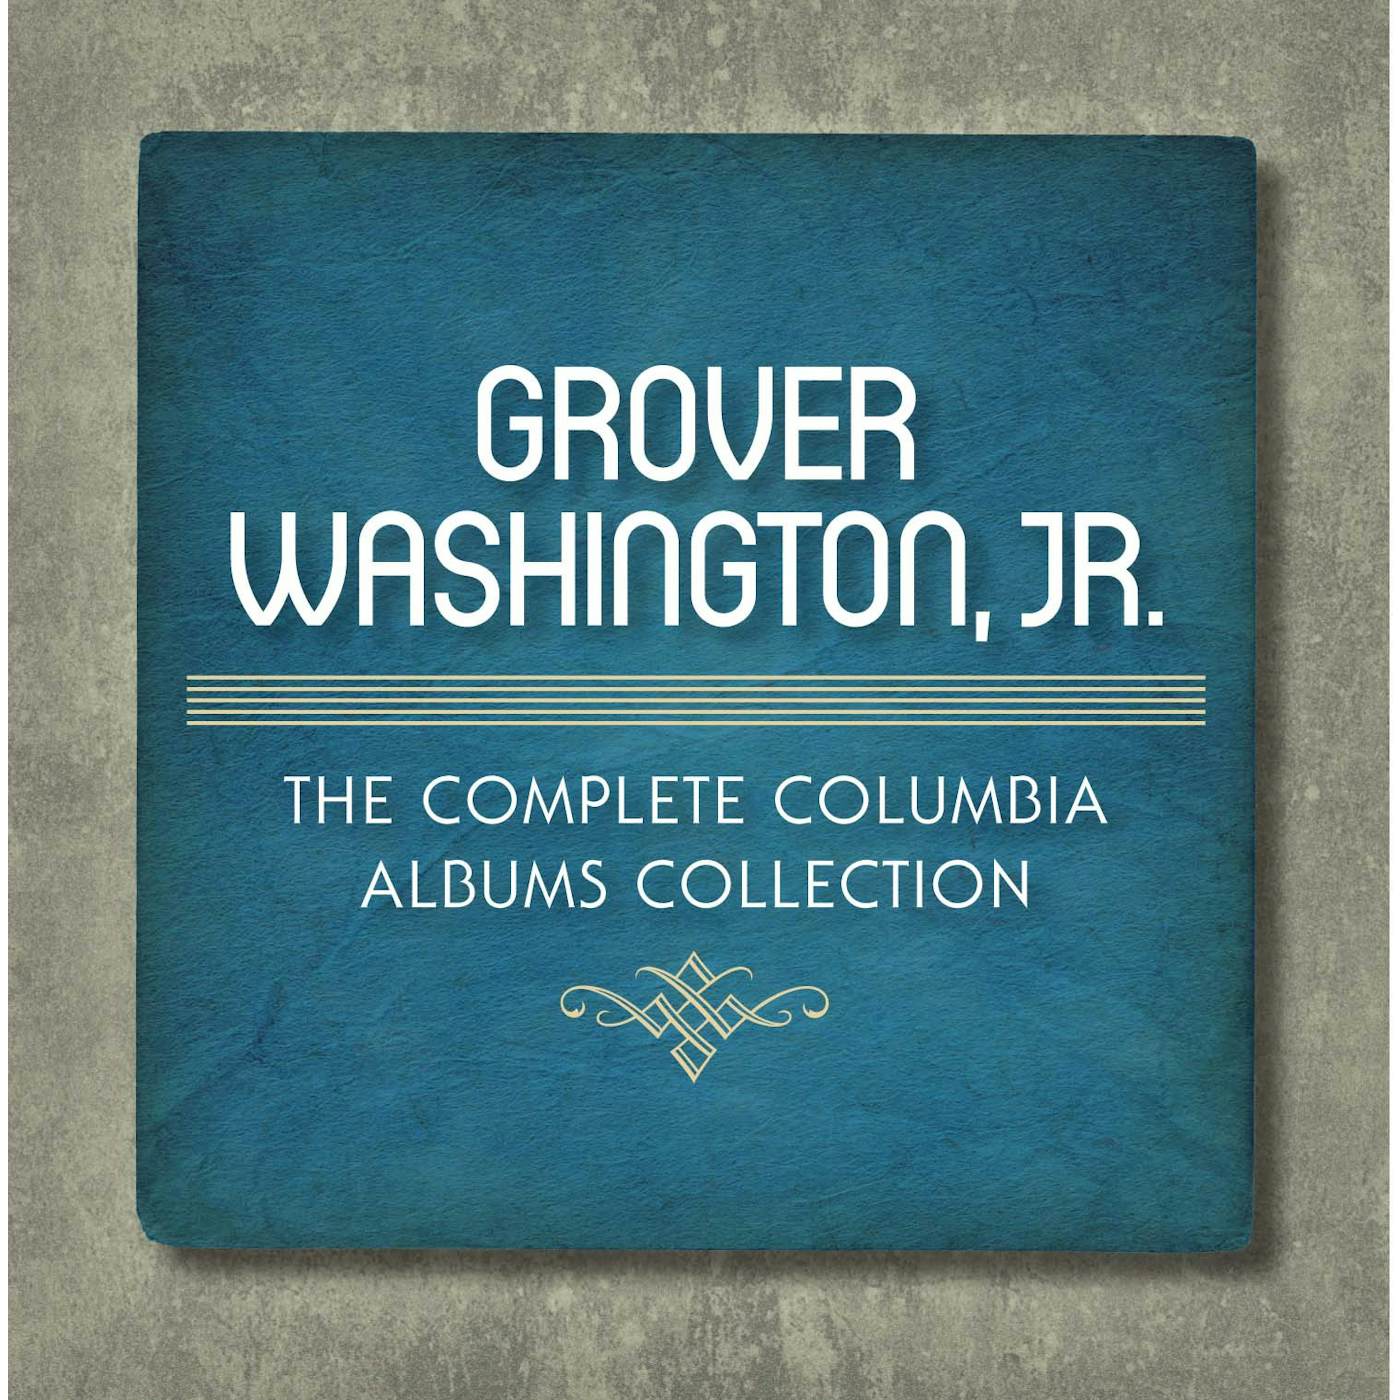 Grover Washington, Jr. COMPLETE COLUMBIA ALBUMS COLLECTION CD